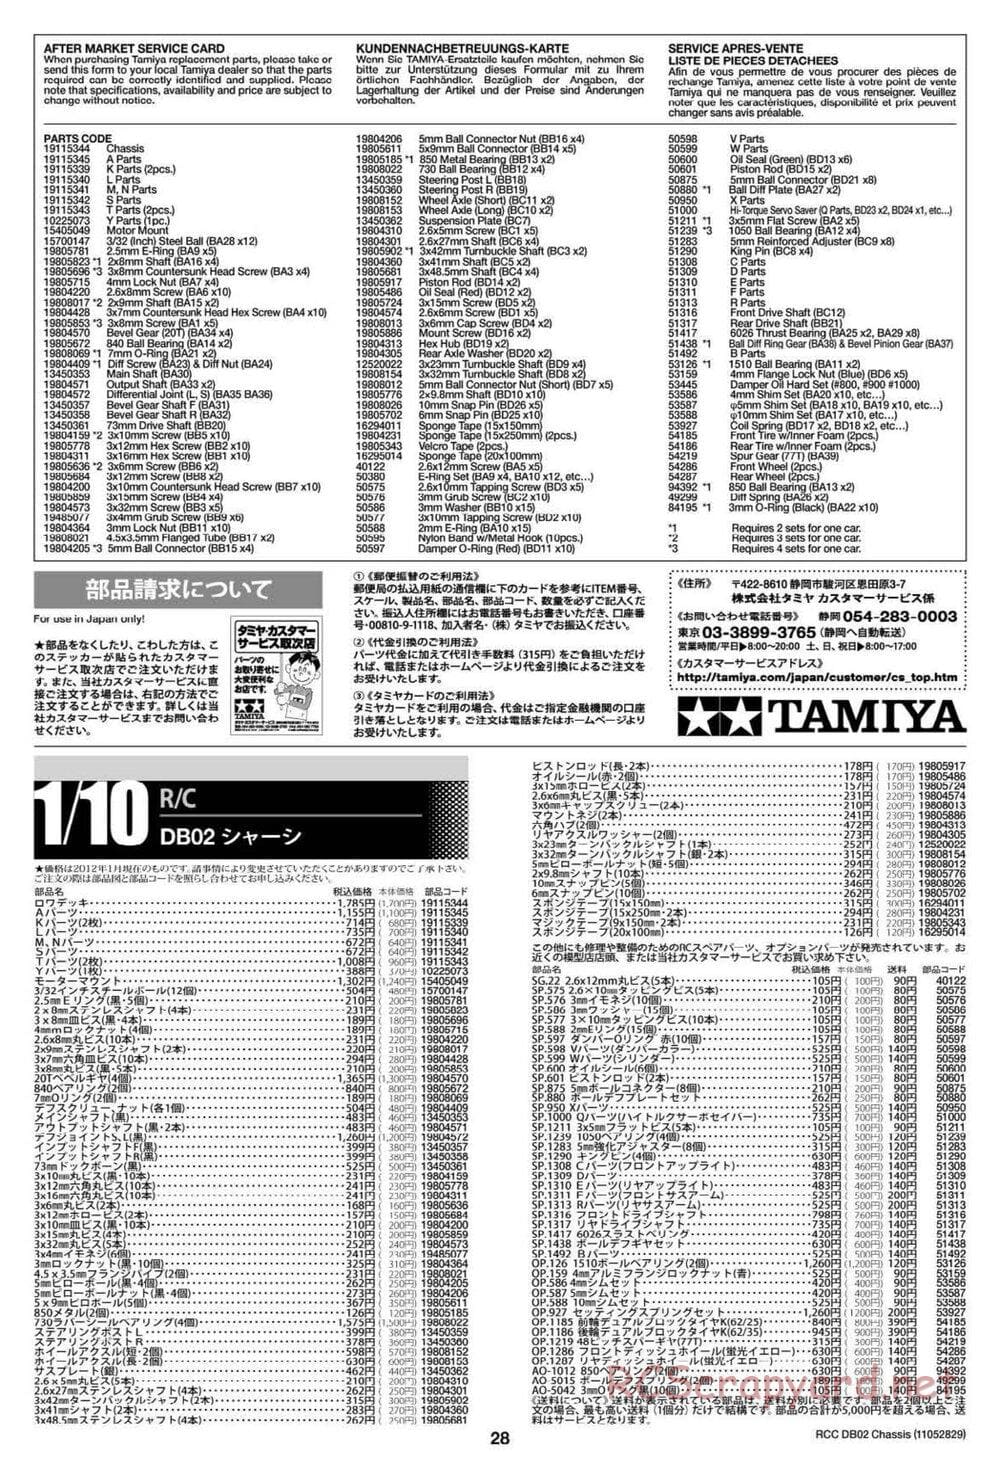 Tamiya - Leonis - DB-02 Chassis - Manual - Page 28